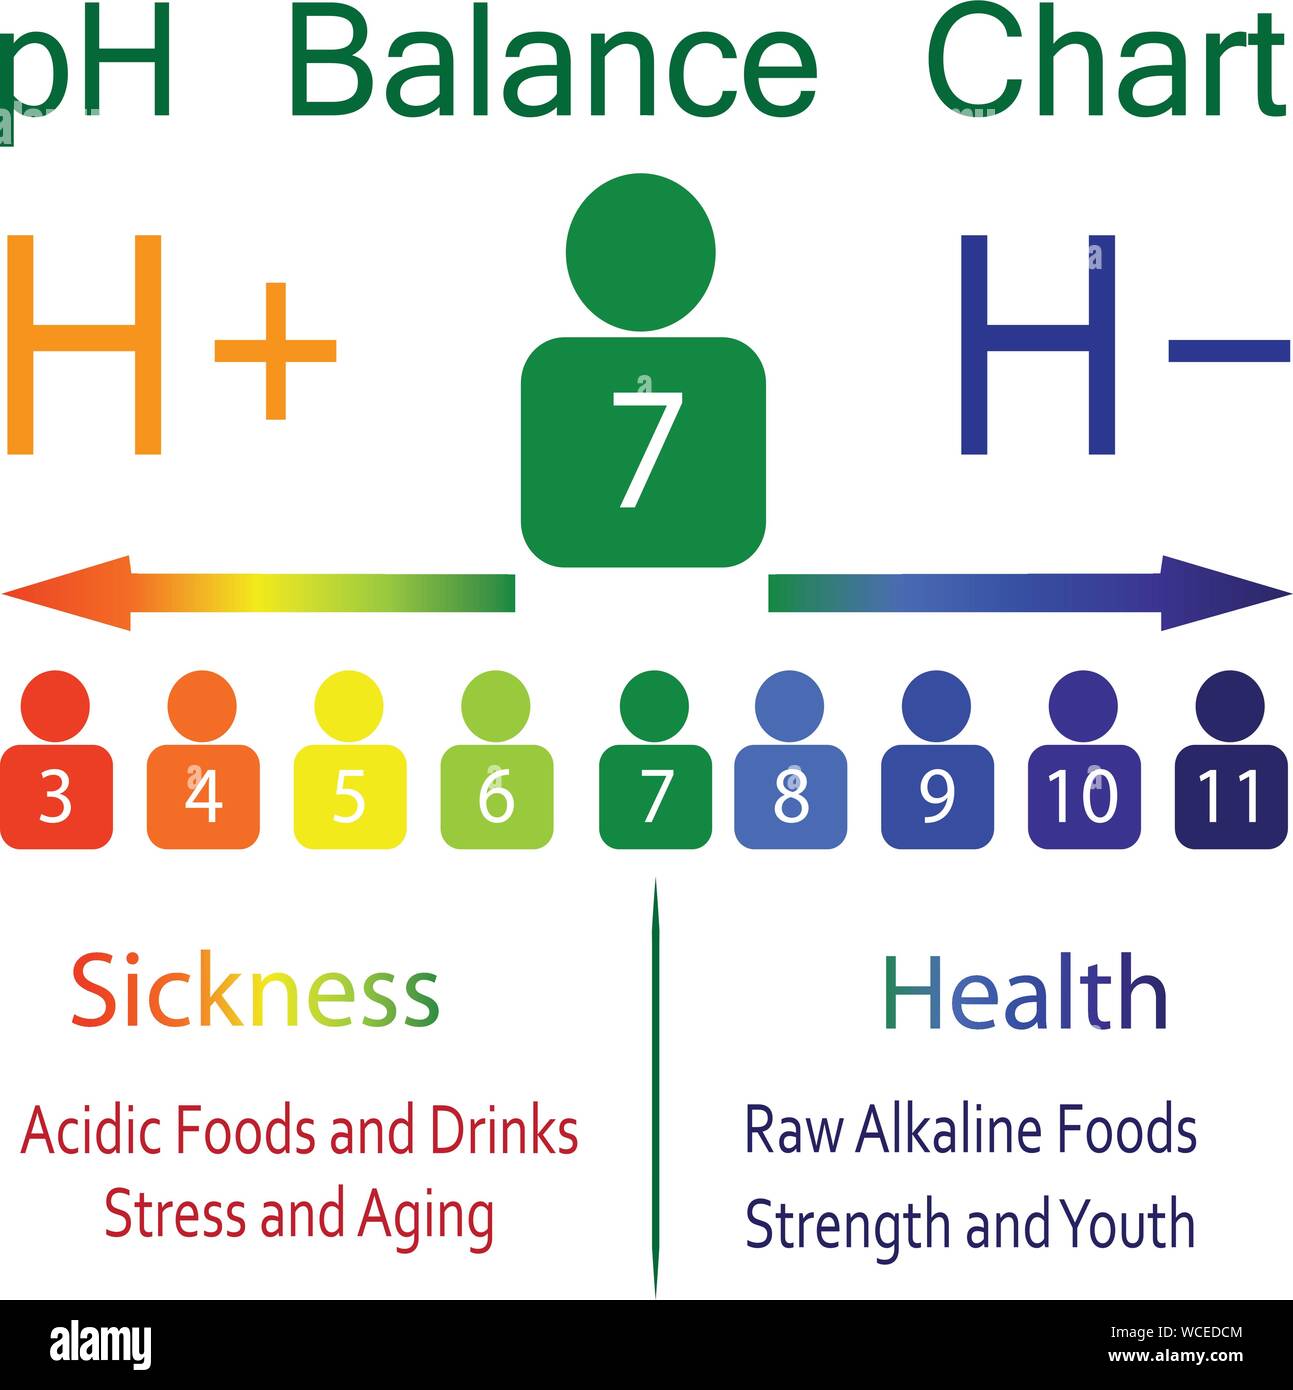 Human Ph Balance Chart